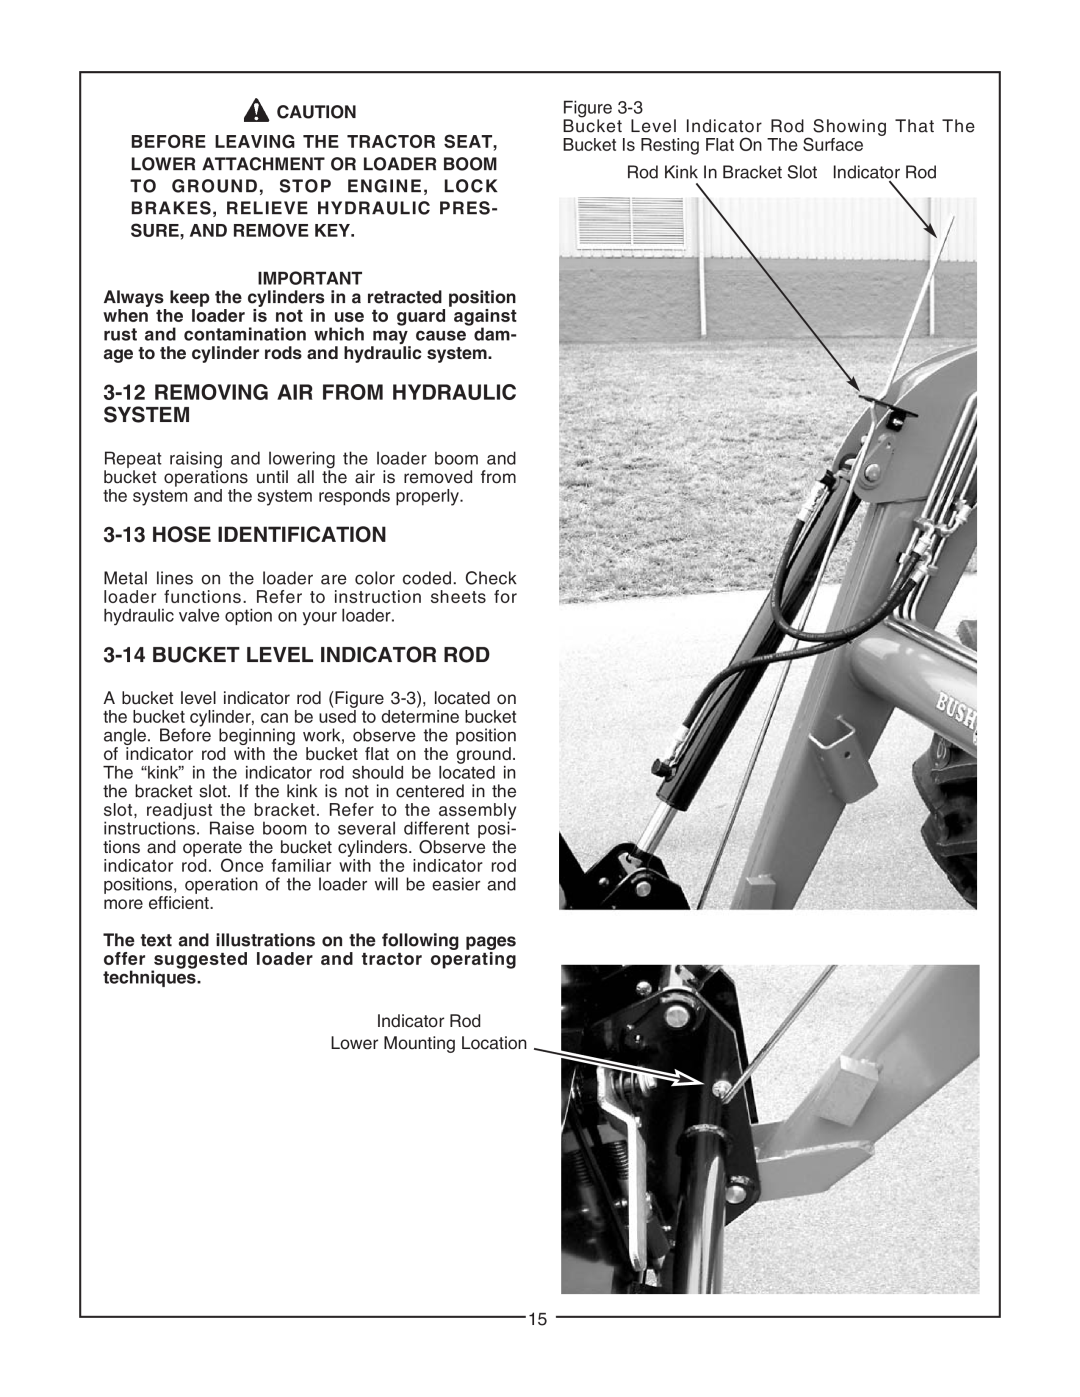 Bush Hog 5045 manual Removing Air From Hydraulic System, Hose Identification, Bucket Level Indicator Rod 